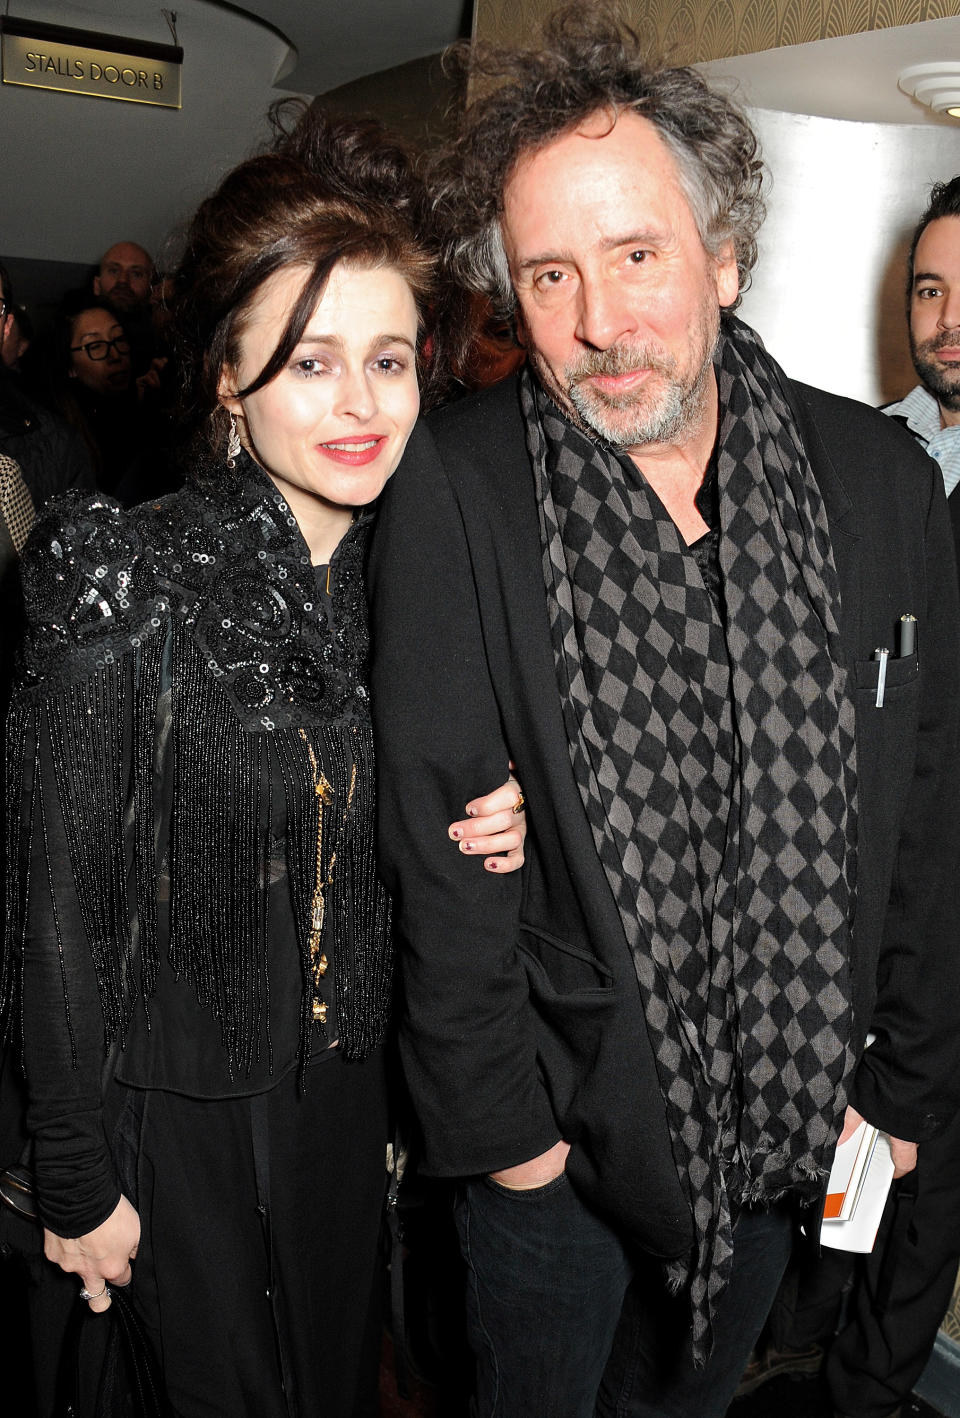 Tim Burton et Helena Bonham Carter